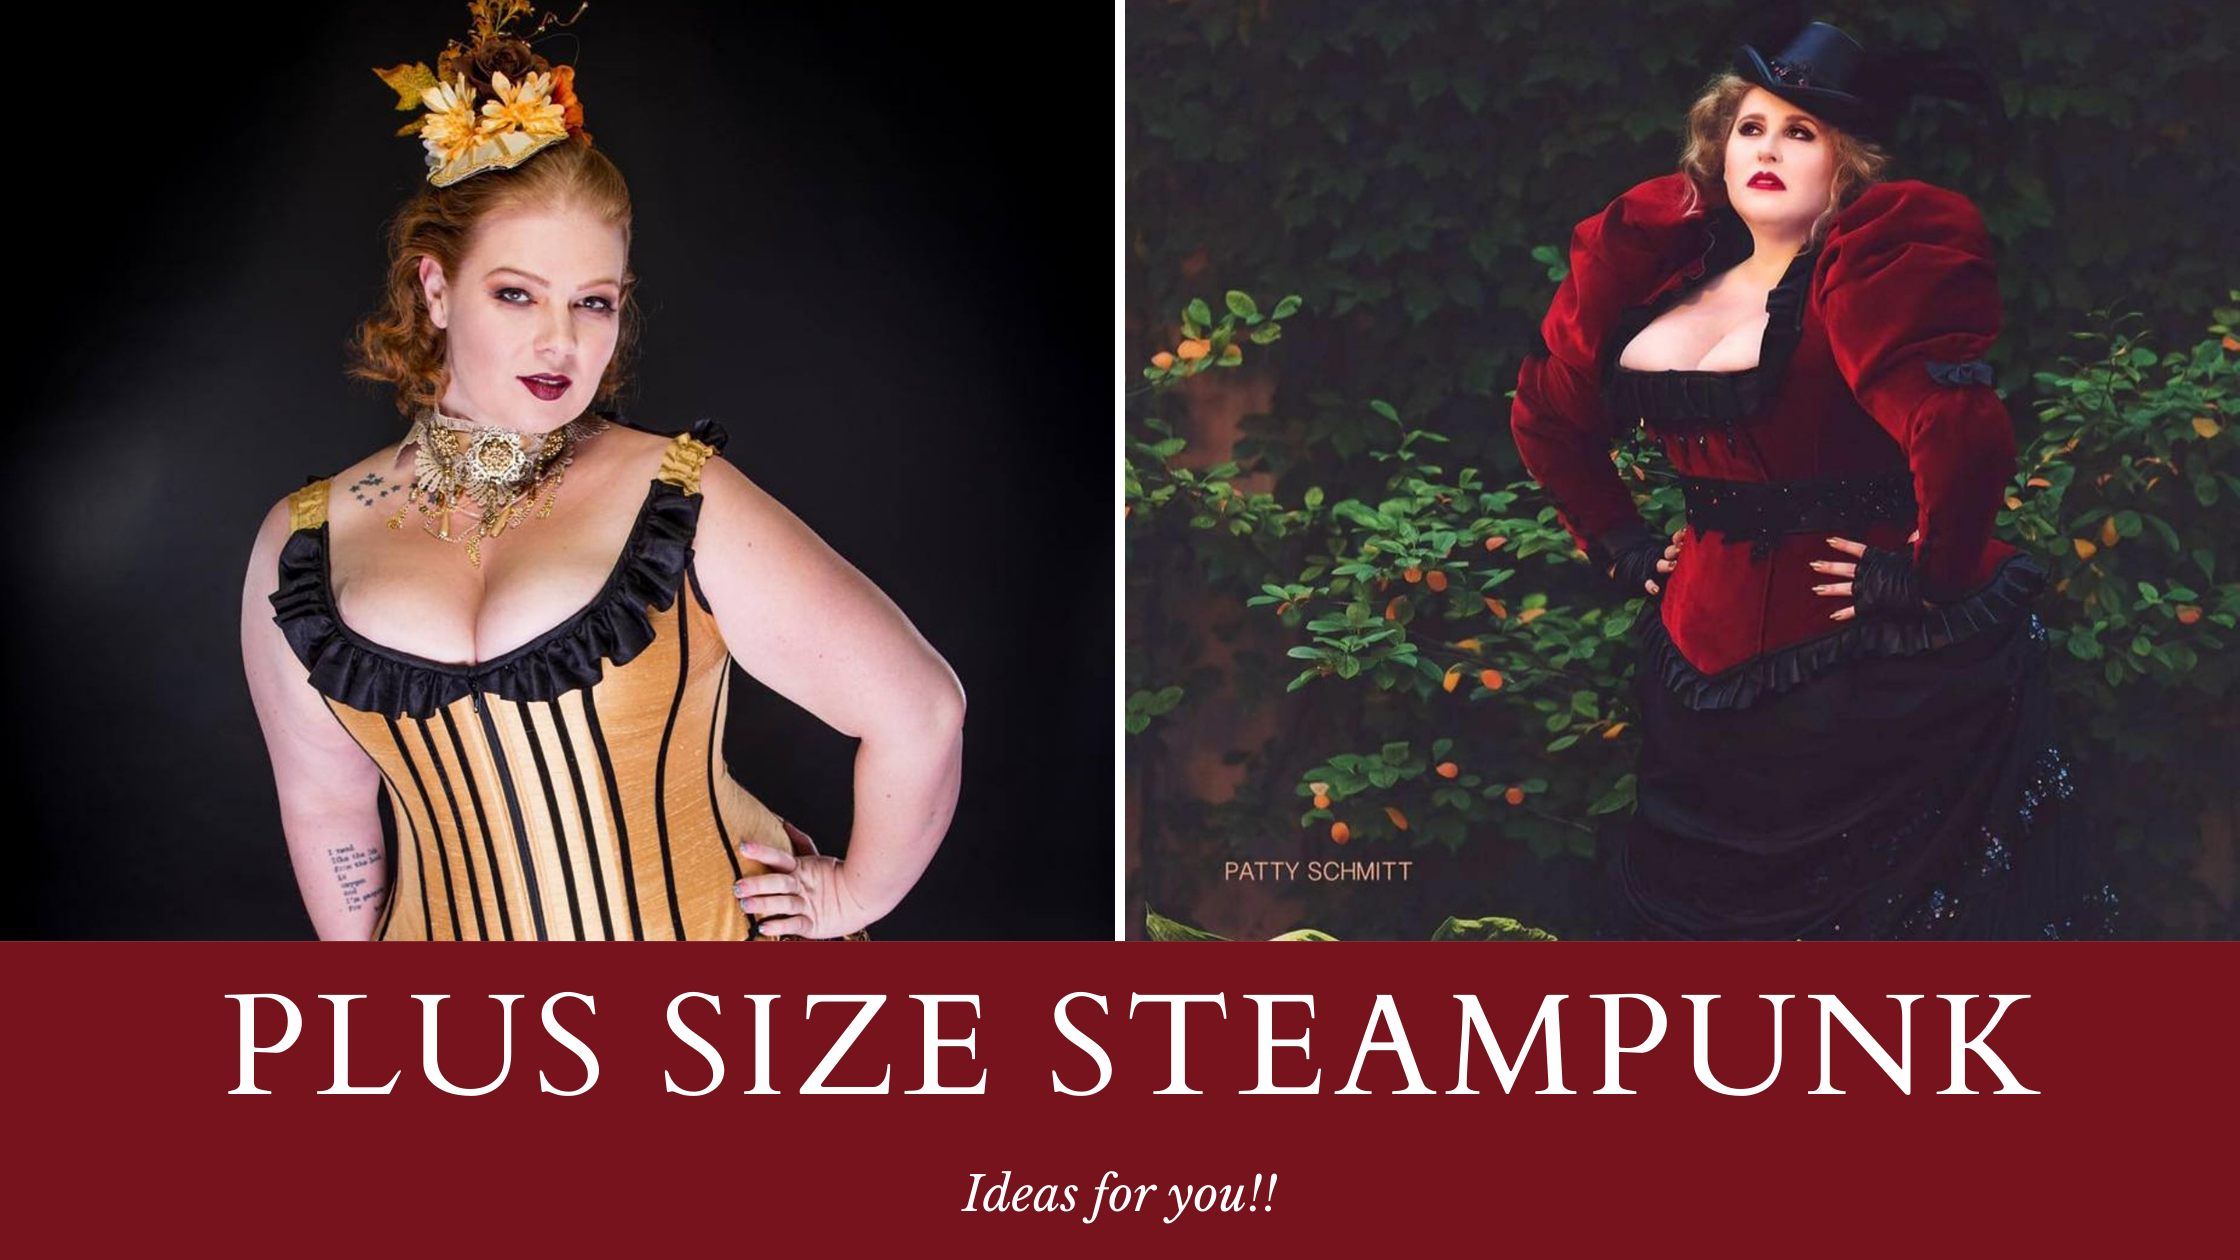 Buy Plus Size Steampunk Costumes & 5+ Costumes - The Huntswoman